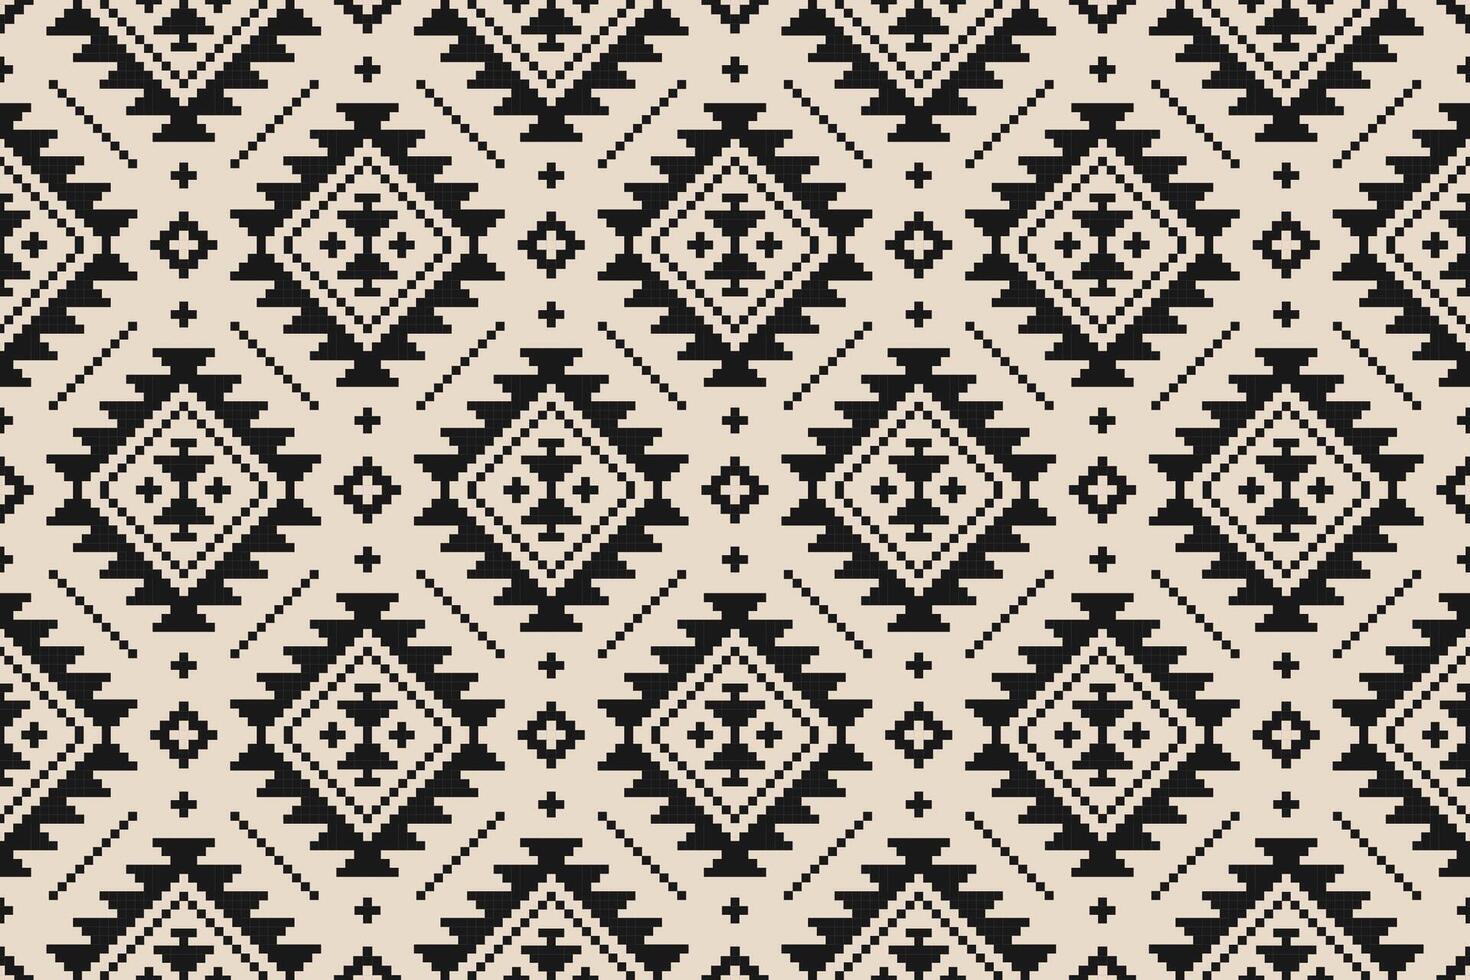 abstrato étnico asteca estilo. étnico geométrico desatado padronizar dentro tribal. americano, mexicano estilo. Projeto para fundo, ilustração, tecido, roupas, tapete, têxtil, batik, bordado. vetor